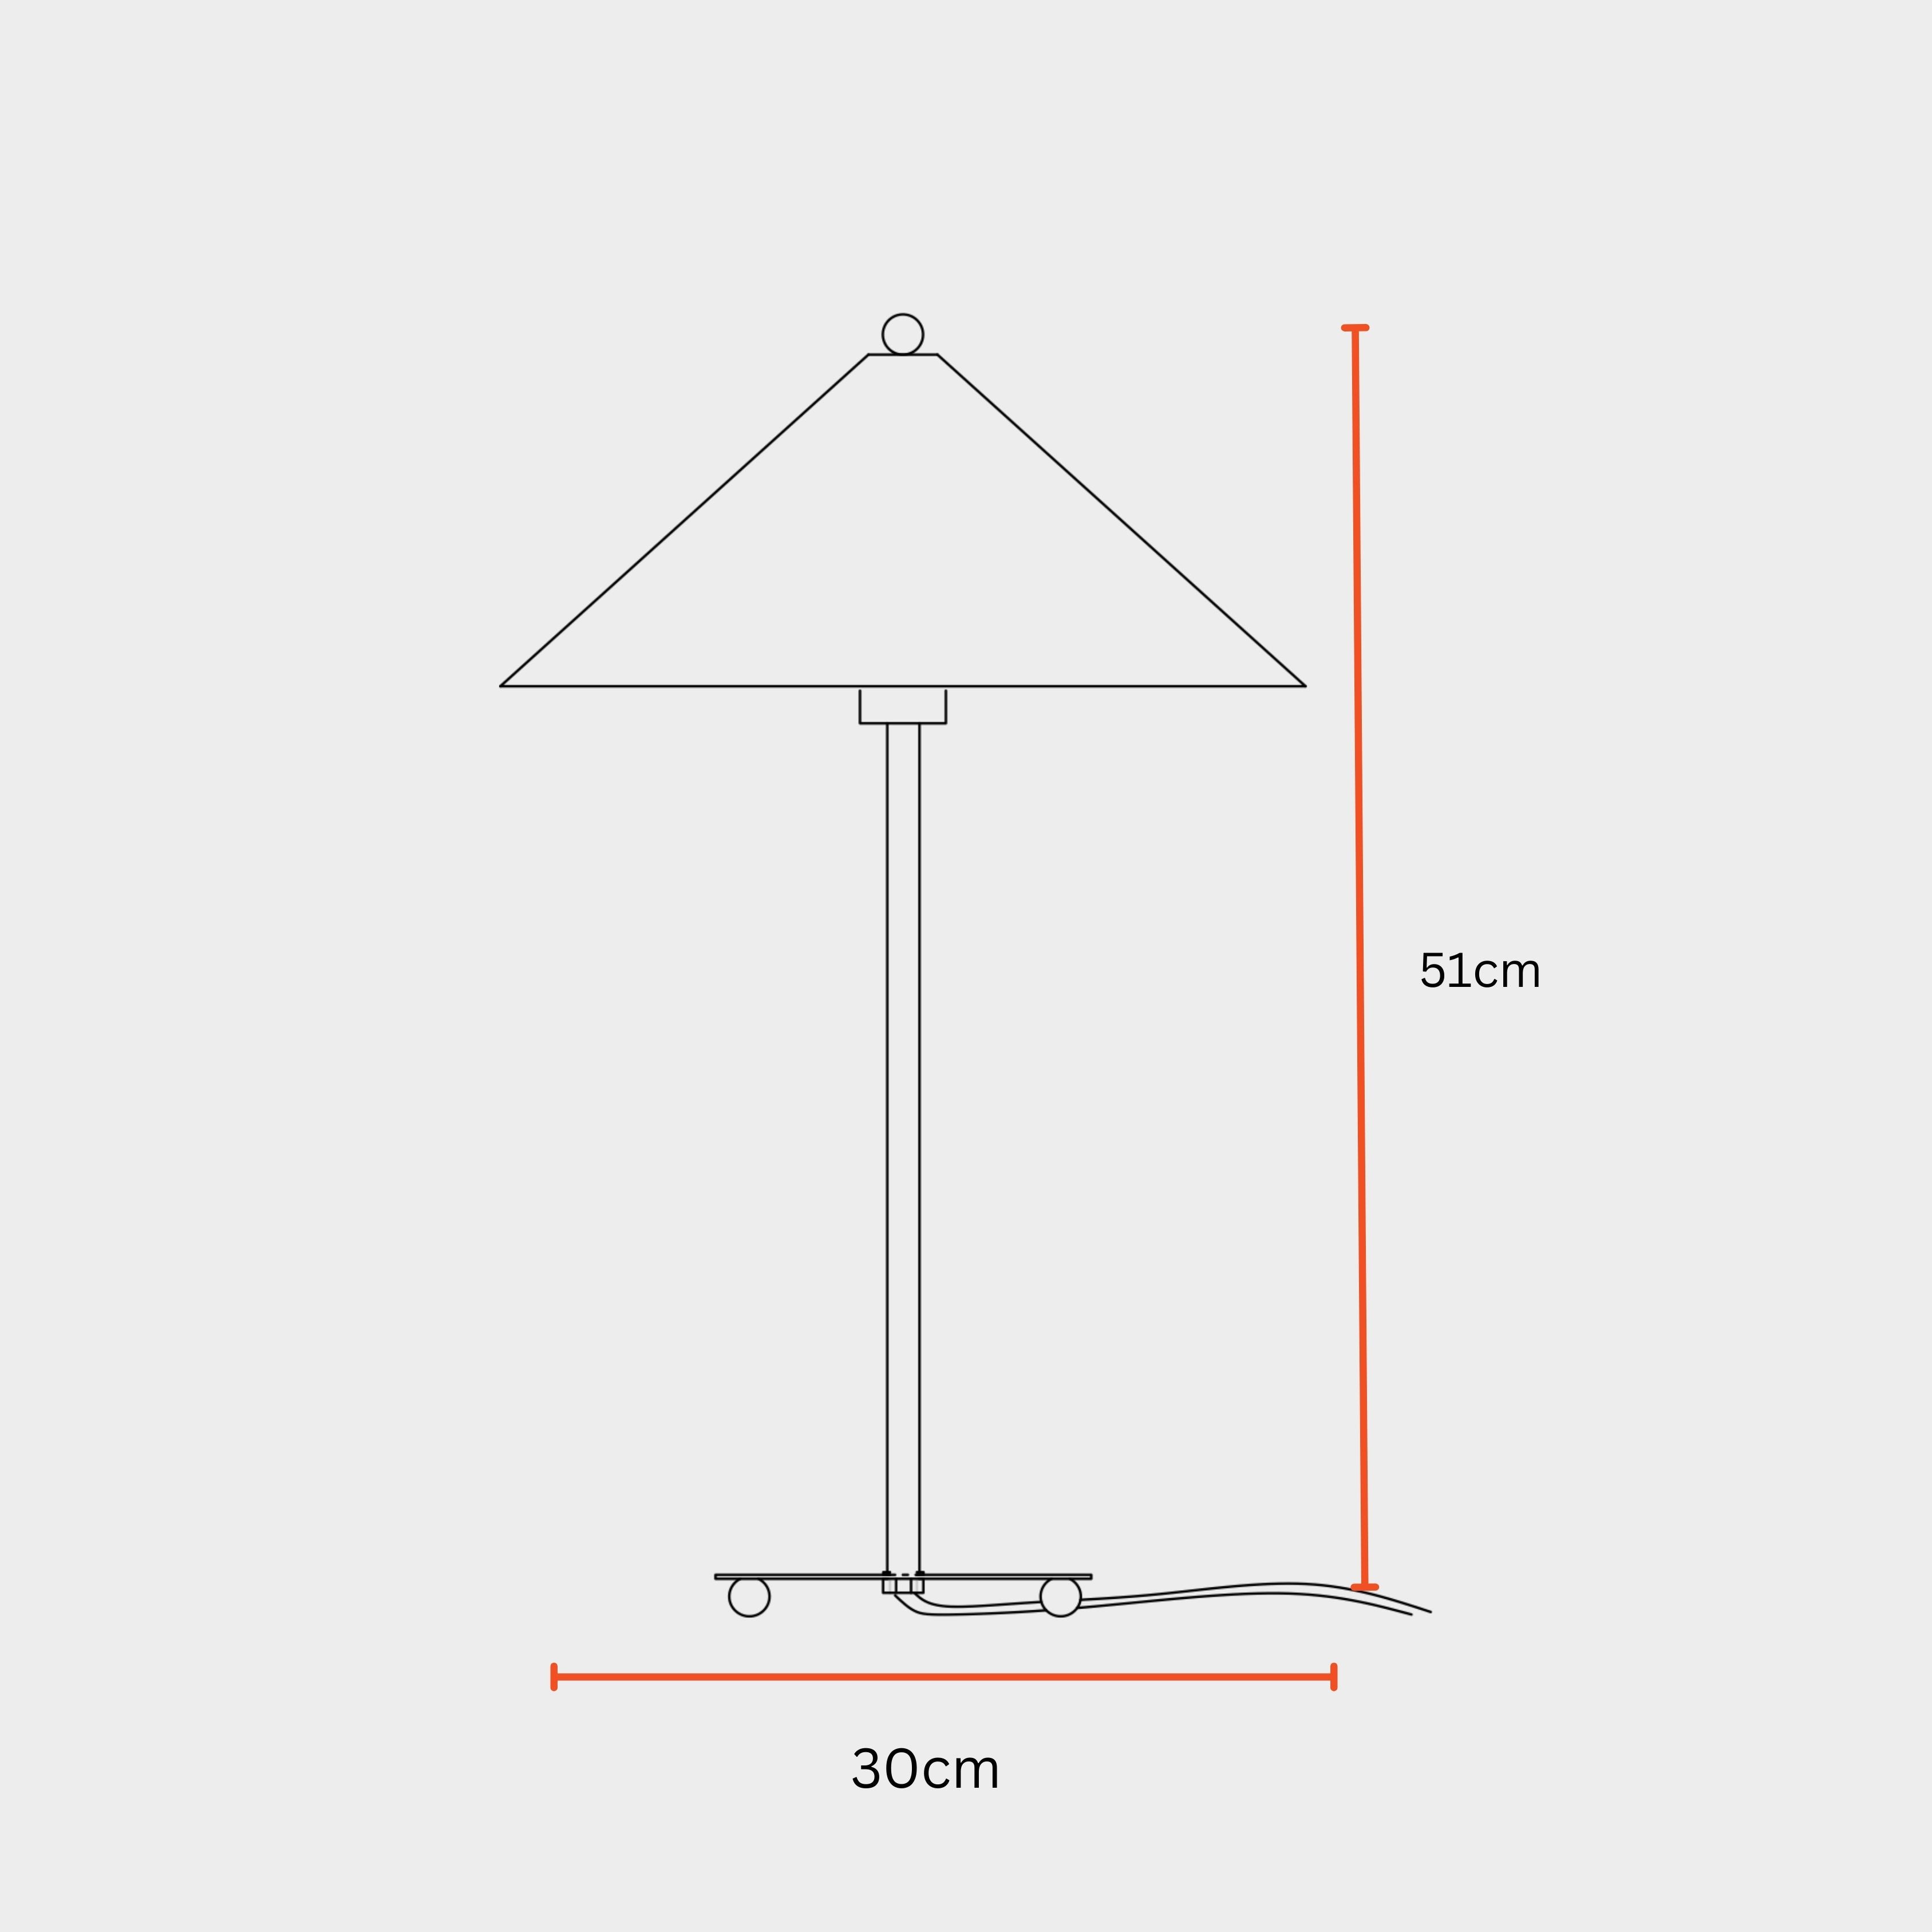 Cone Stick Table Lamp - Modern Charm Stick Bedside Lamp - Premium Matte Finish Desk Lamp